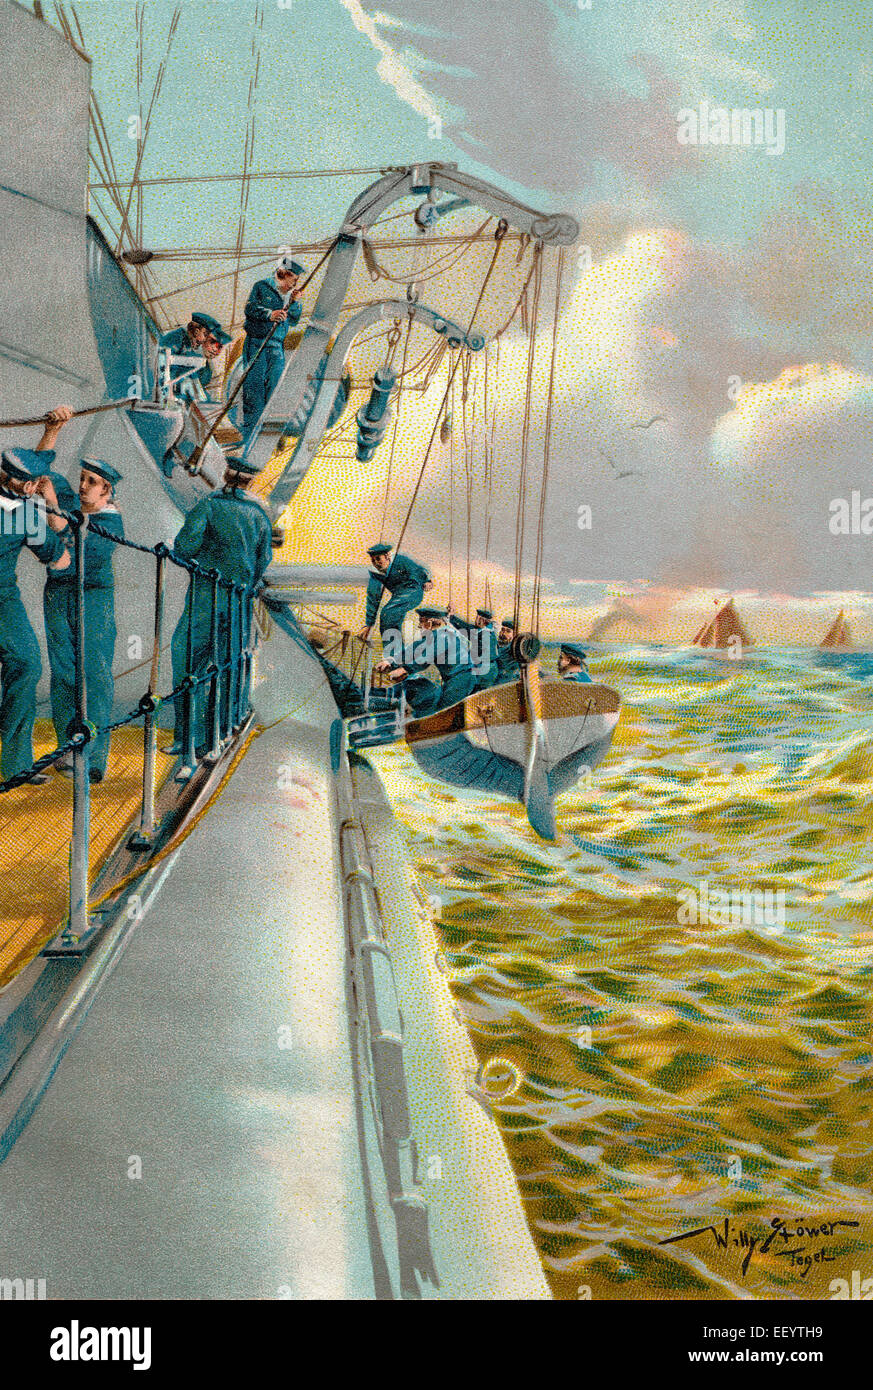 Le manovre in barca con una scialuppa di salvataggio, c. 1900, Germania, Bootsmanöver auf vedere Mit einem Rettungsboot, ca. 1900, Deutschland Foto Stock